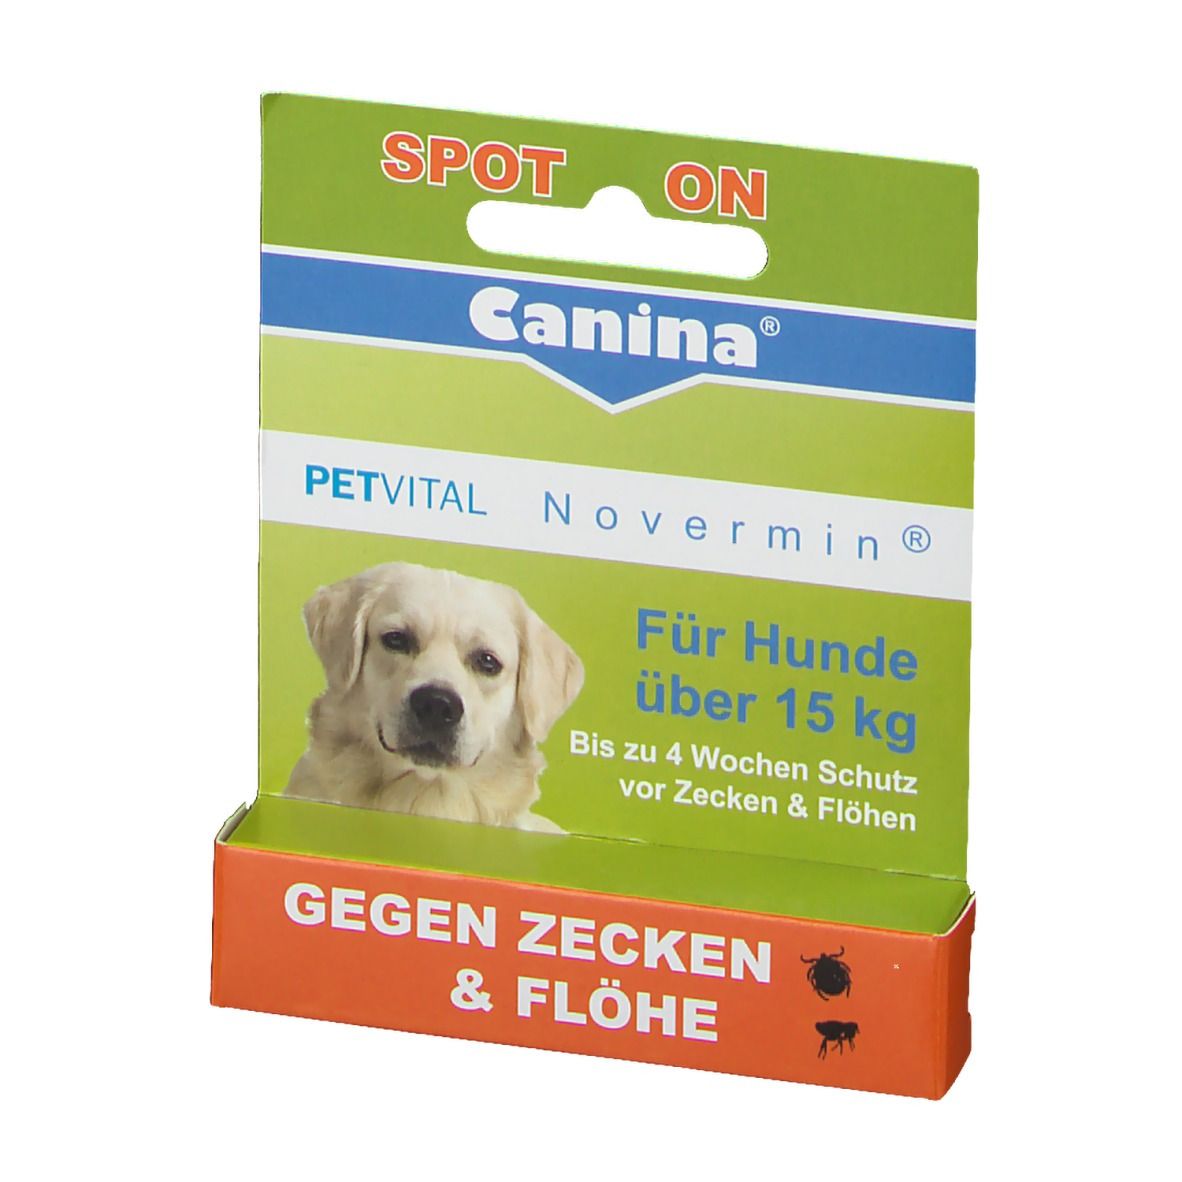 Canina® PETVITAL Novermin® für Hunde über 15 kg